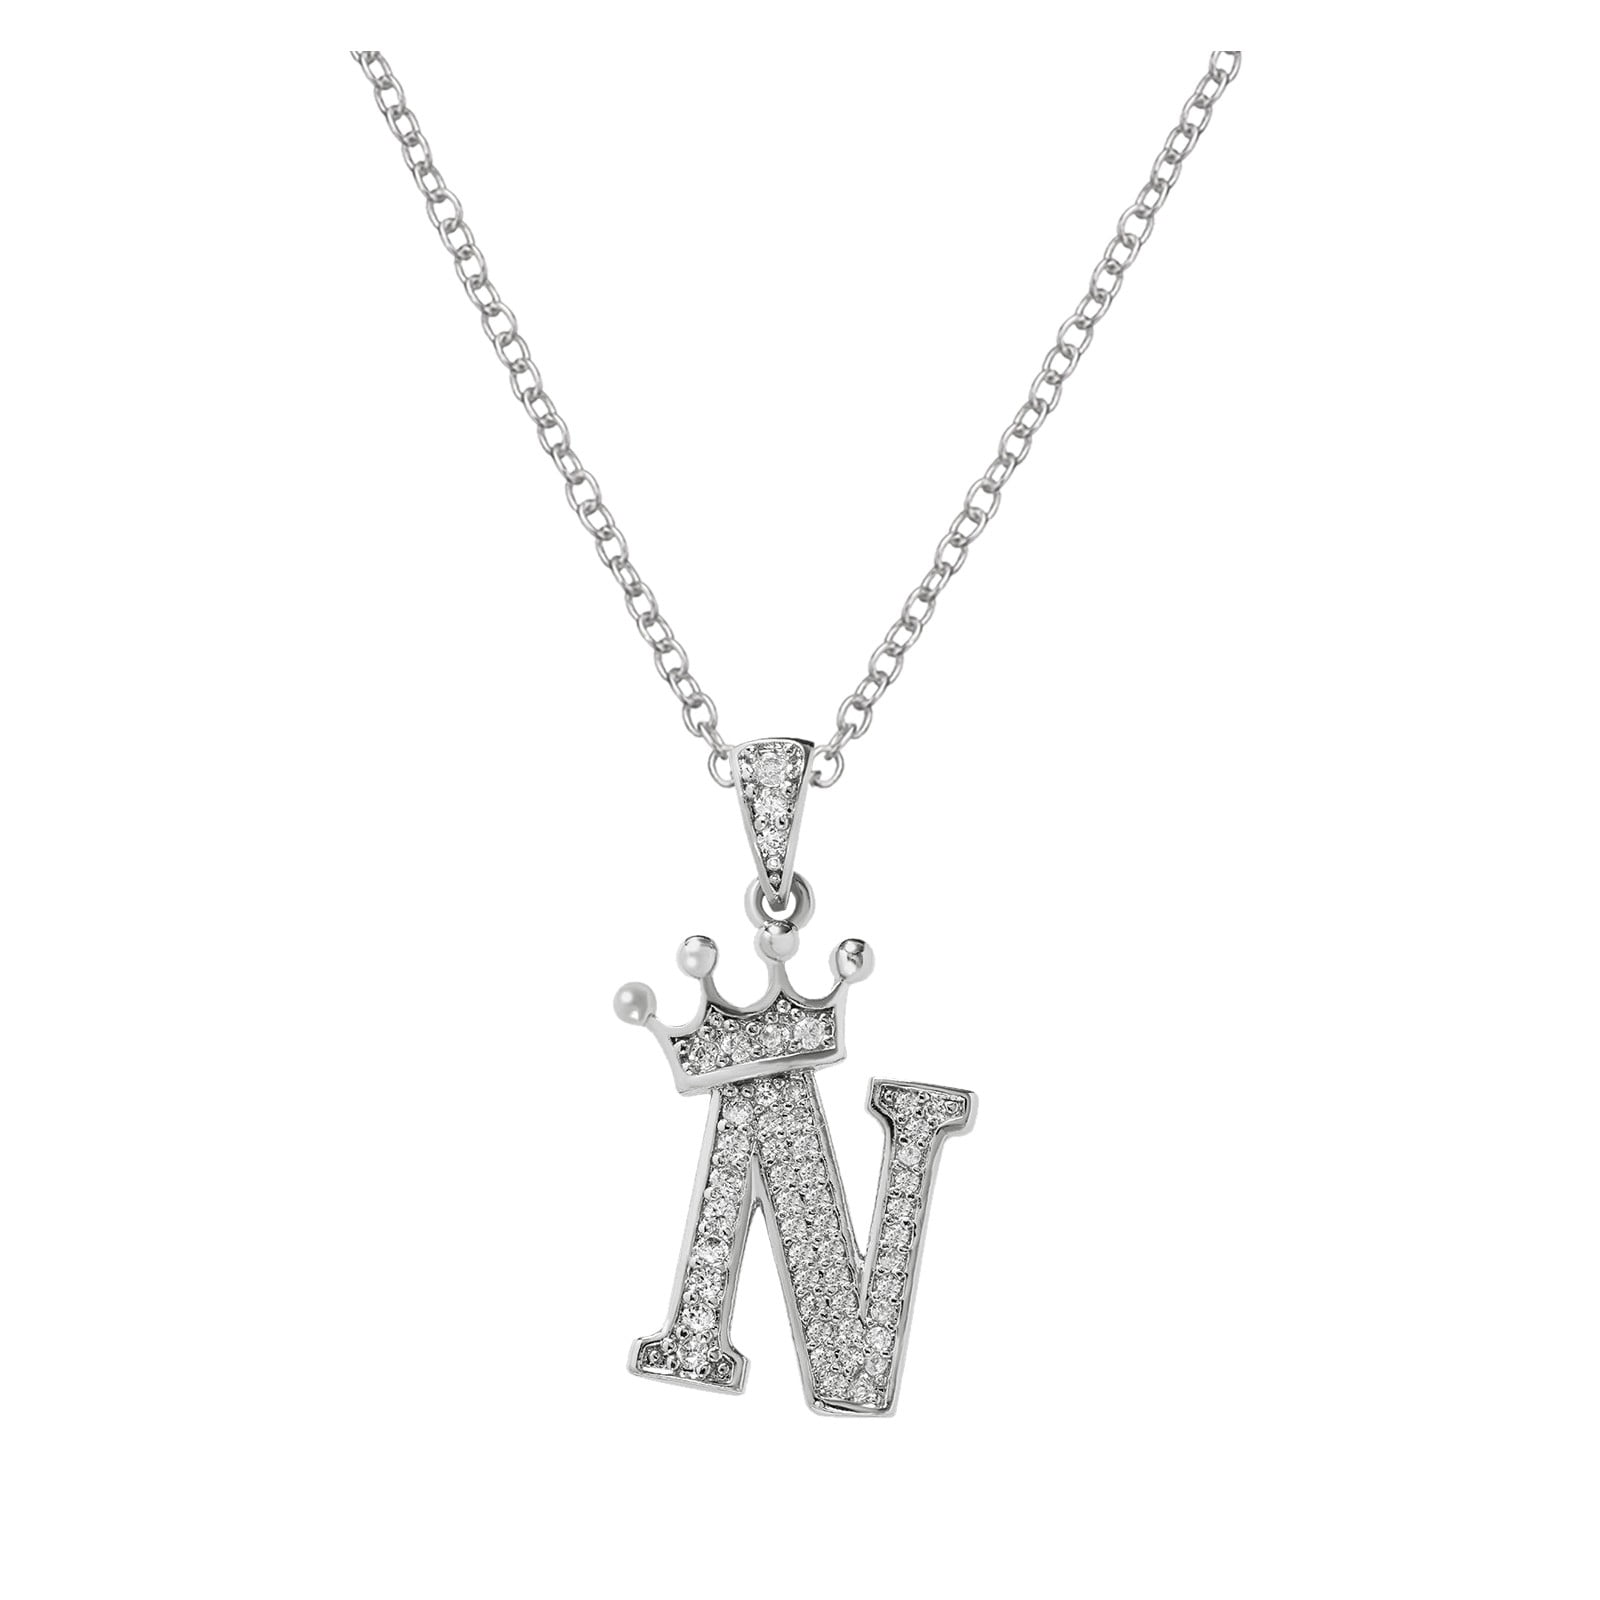 New Fine 18K White Gold Necklace  Perfect Box Elegant Chain Necklace 17.7"L 